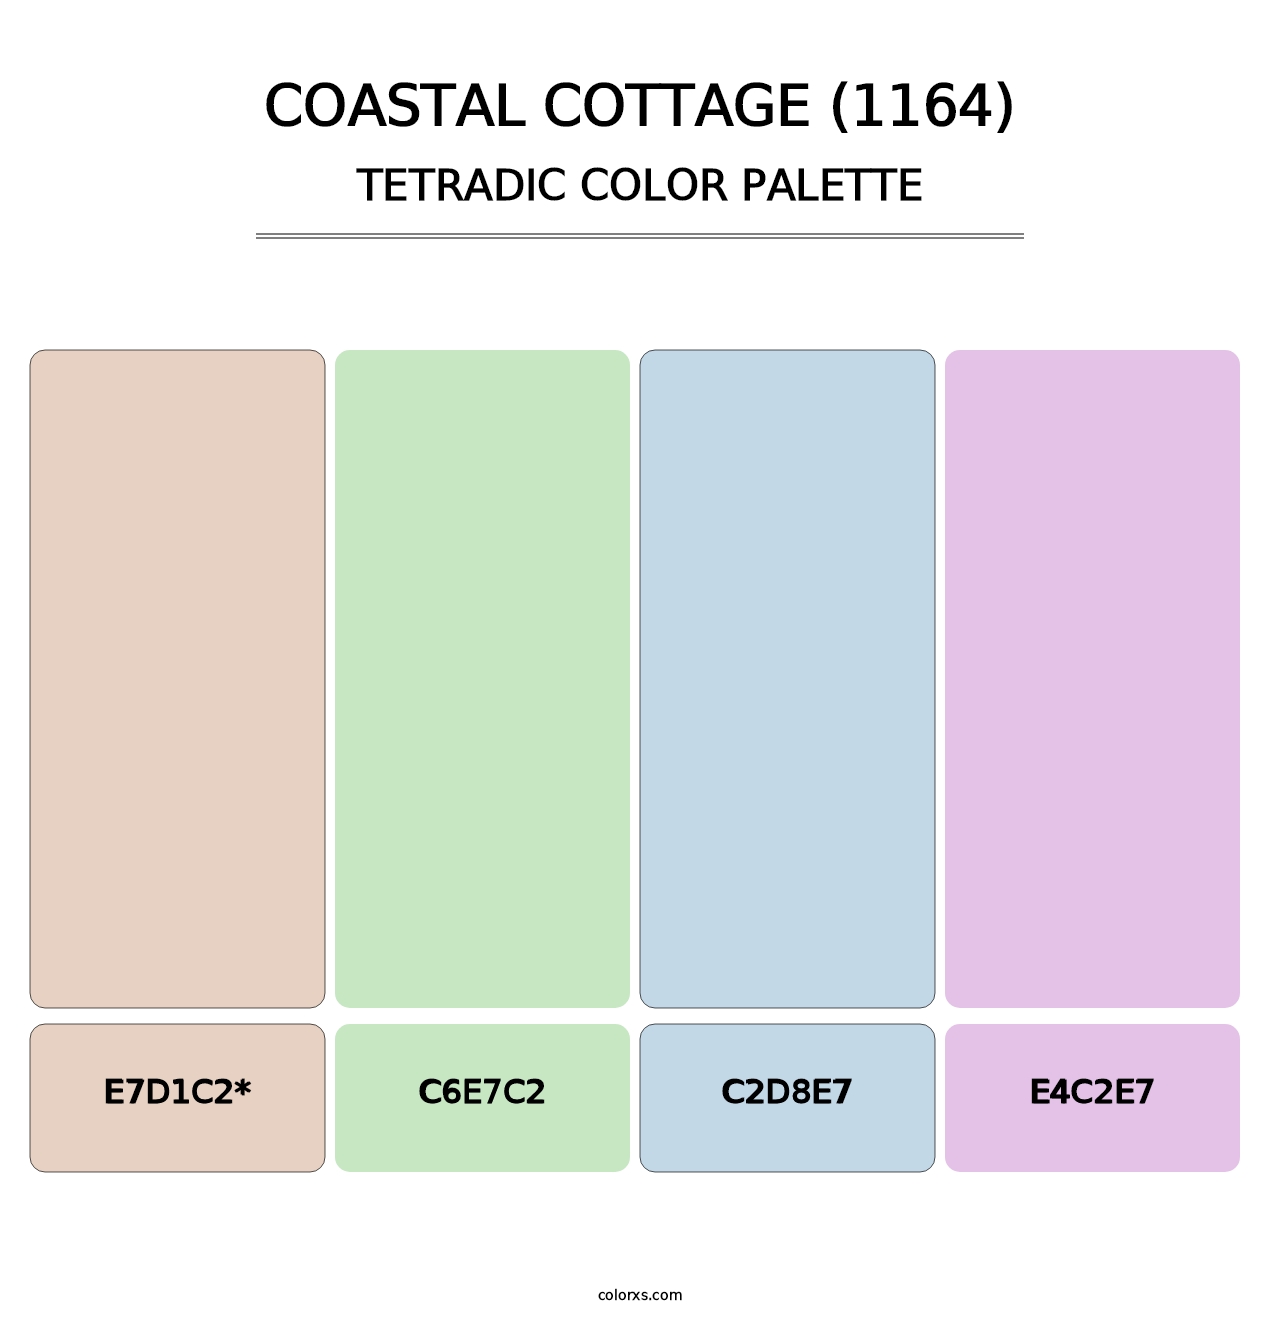 Coastal Cottage (1164) - Tetradic Color Palette